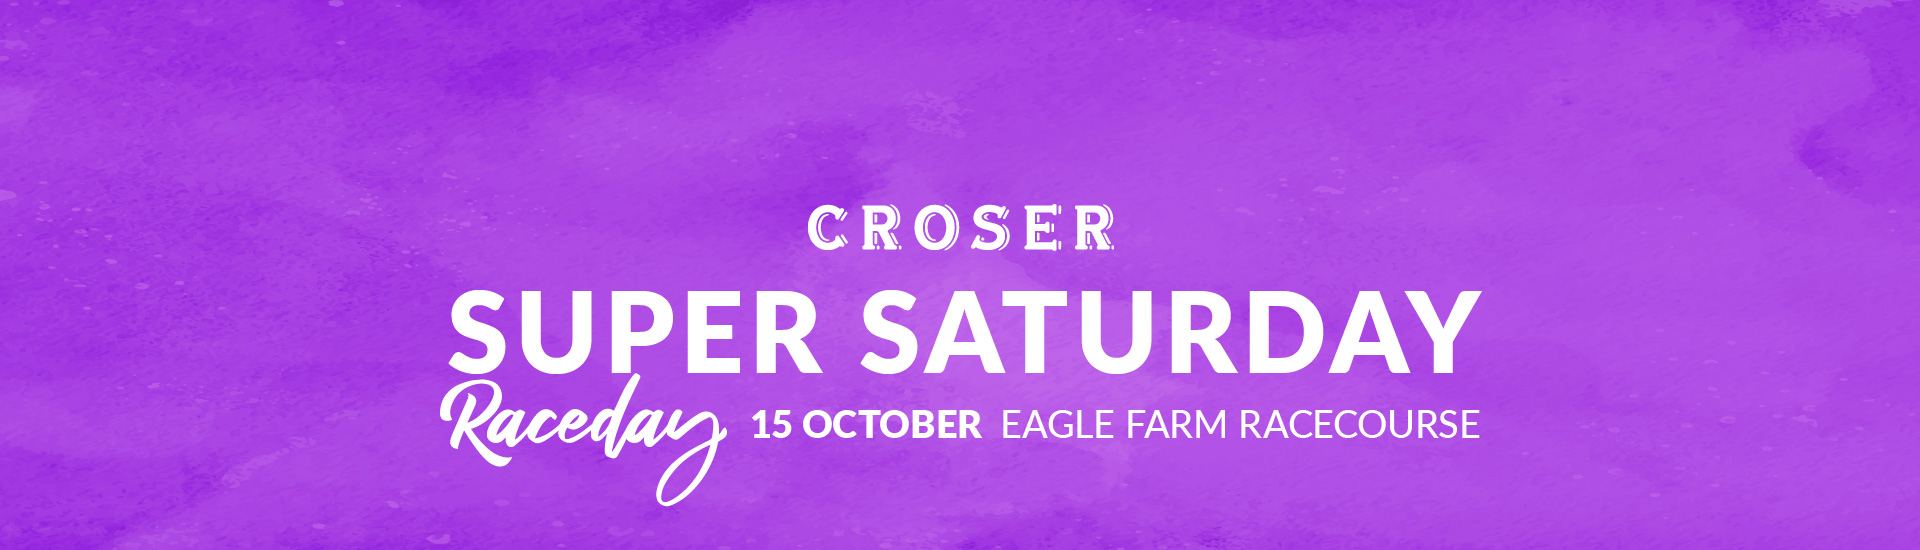 Croser-Super-Saturday_Webpage-Banner_1920x550 | Brisbane Racing Club